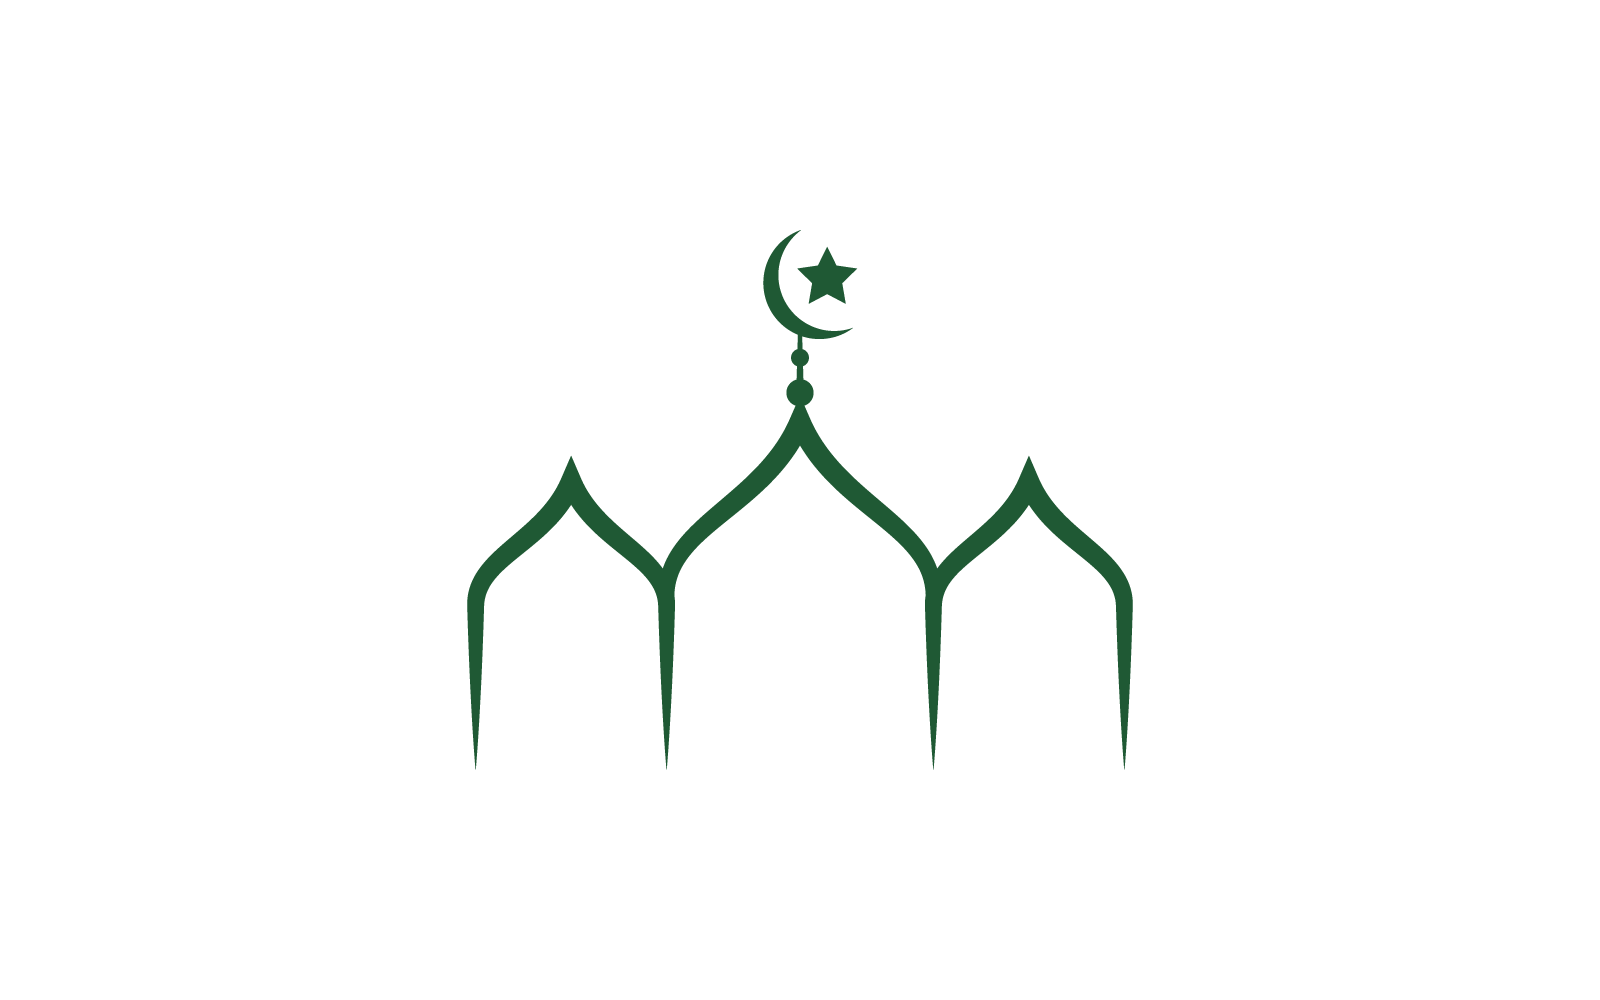 Ramadhan kareem poster banner or wallpaper illustration design